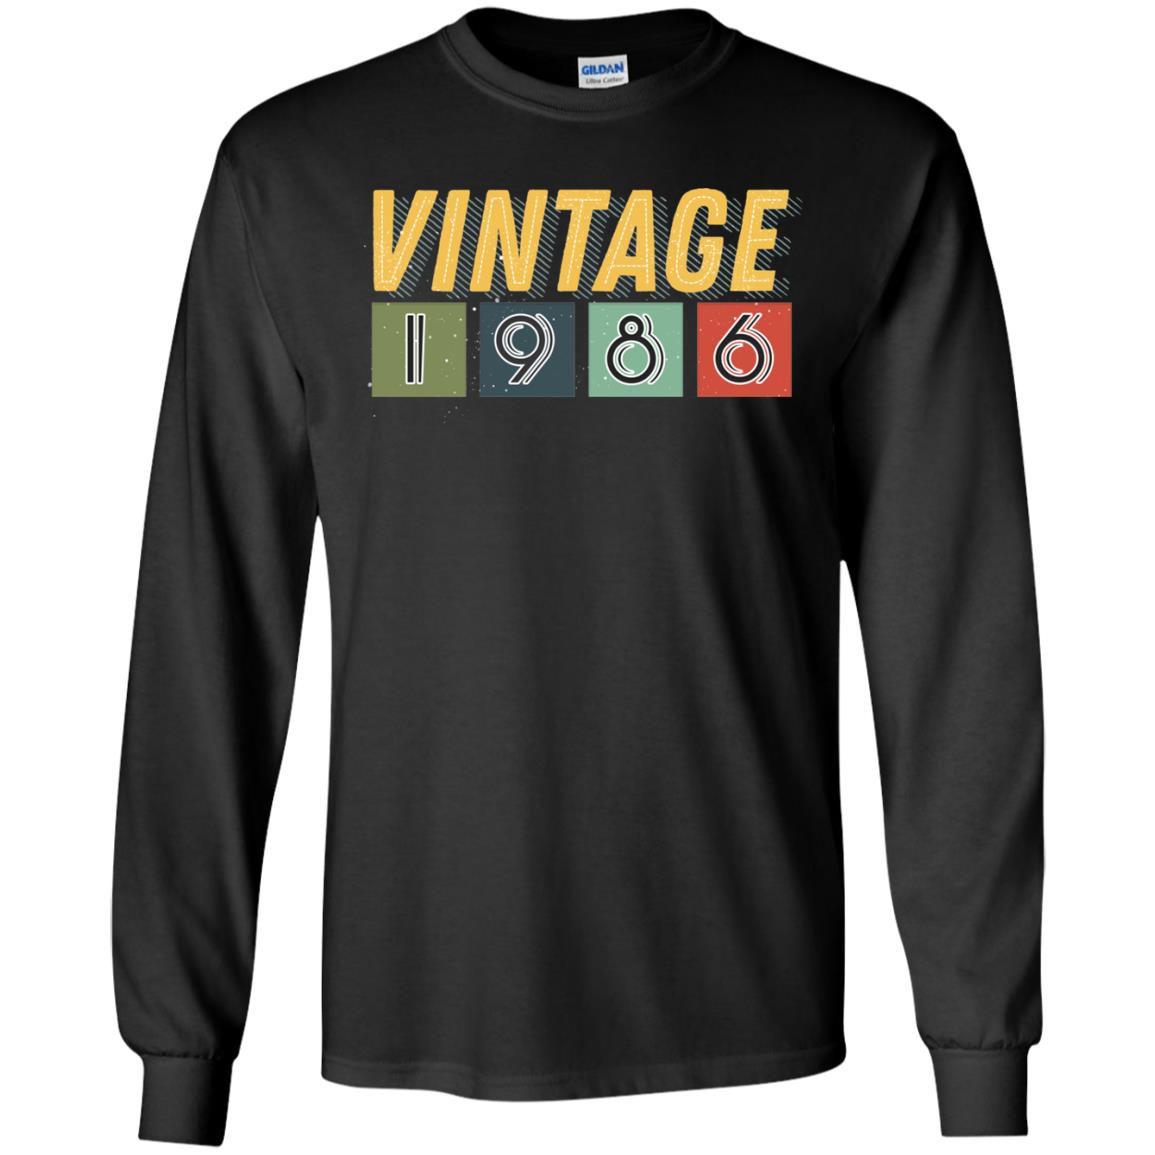 Vintage 1986 32th Birthday Gift Shirt For Mens Or WomensG240 Gildan LS Ultra Cotton T-Shirt